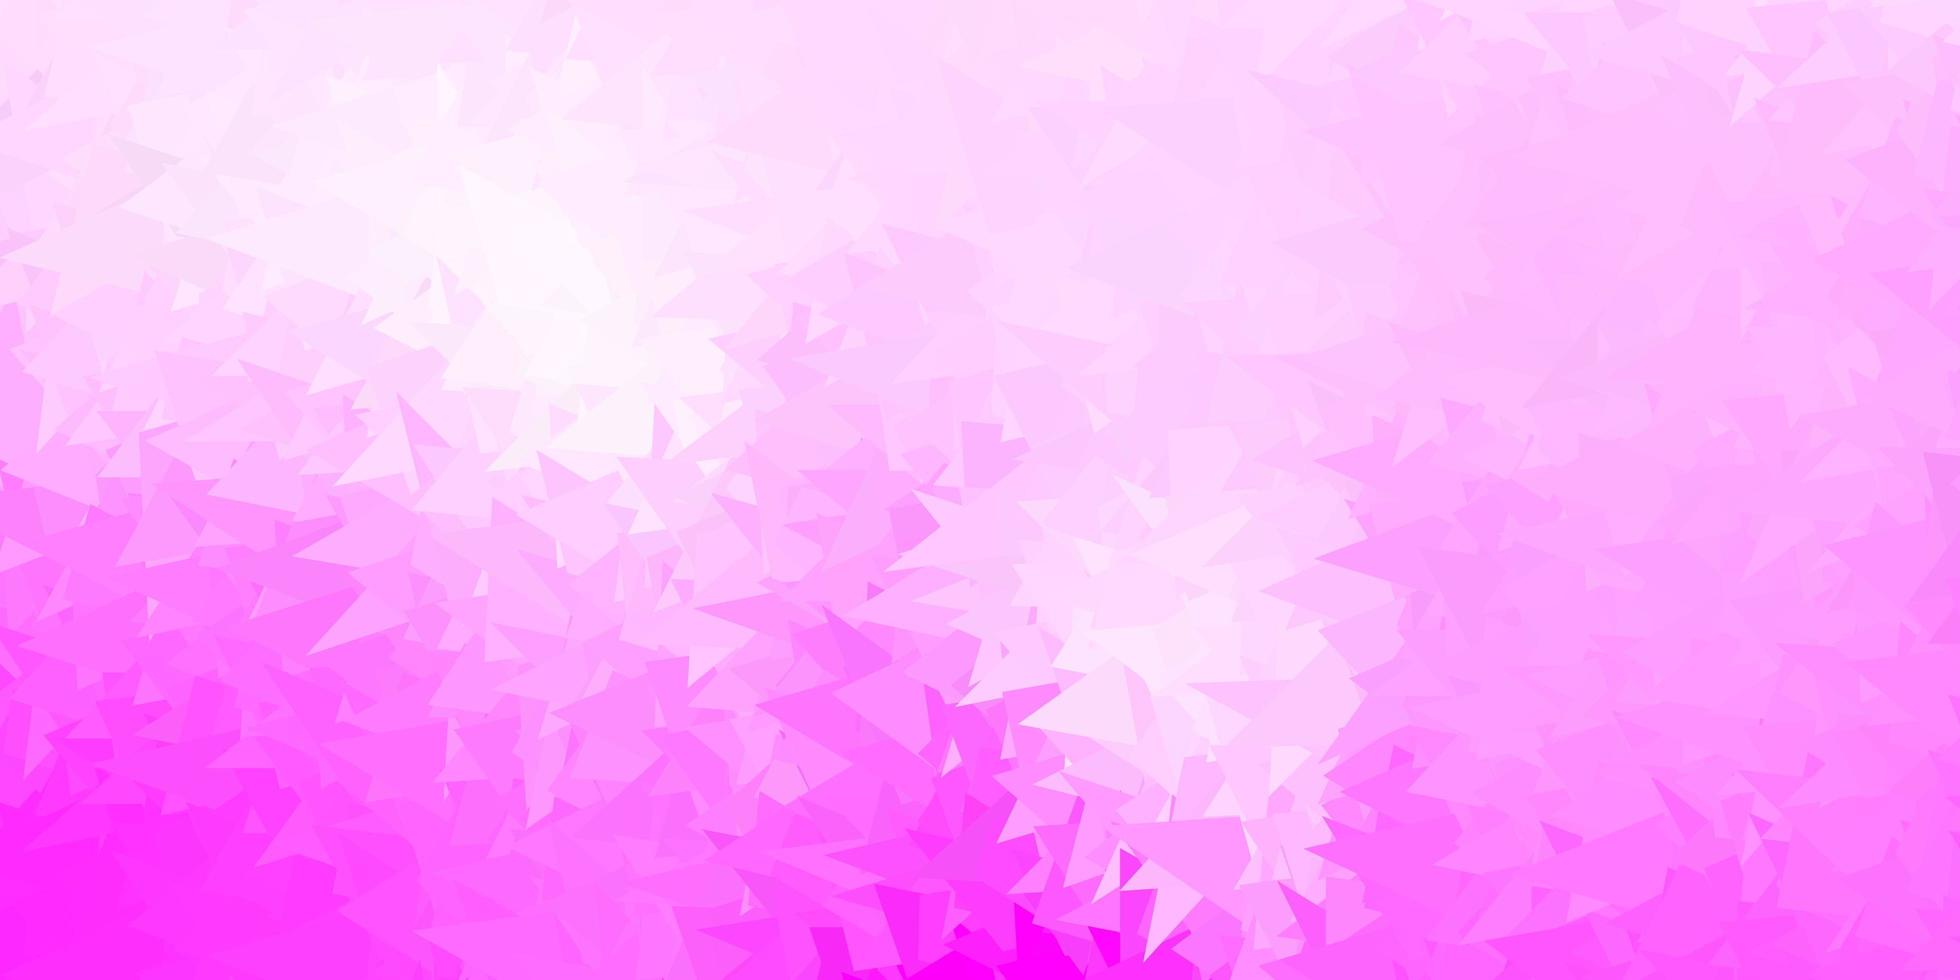 papel de parede poligonal geométrico de vetor rosa claro.